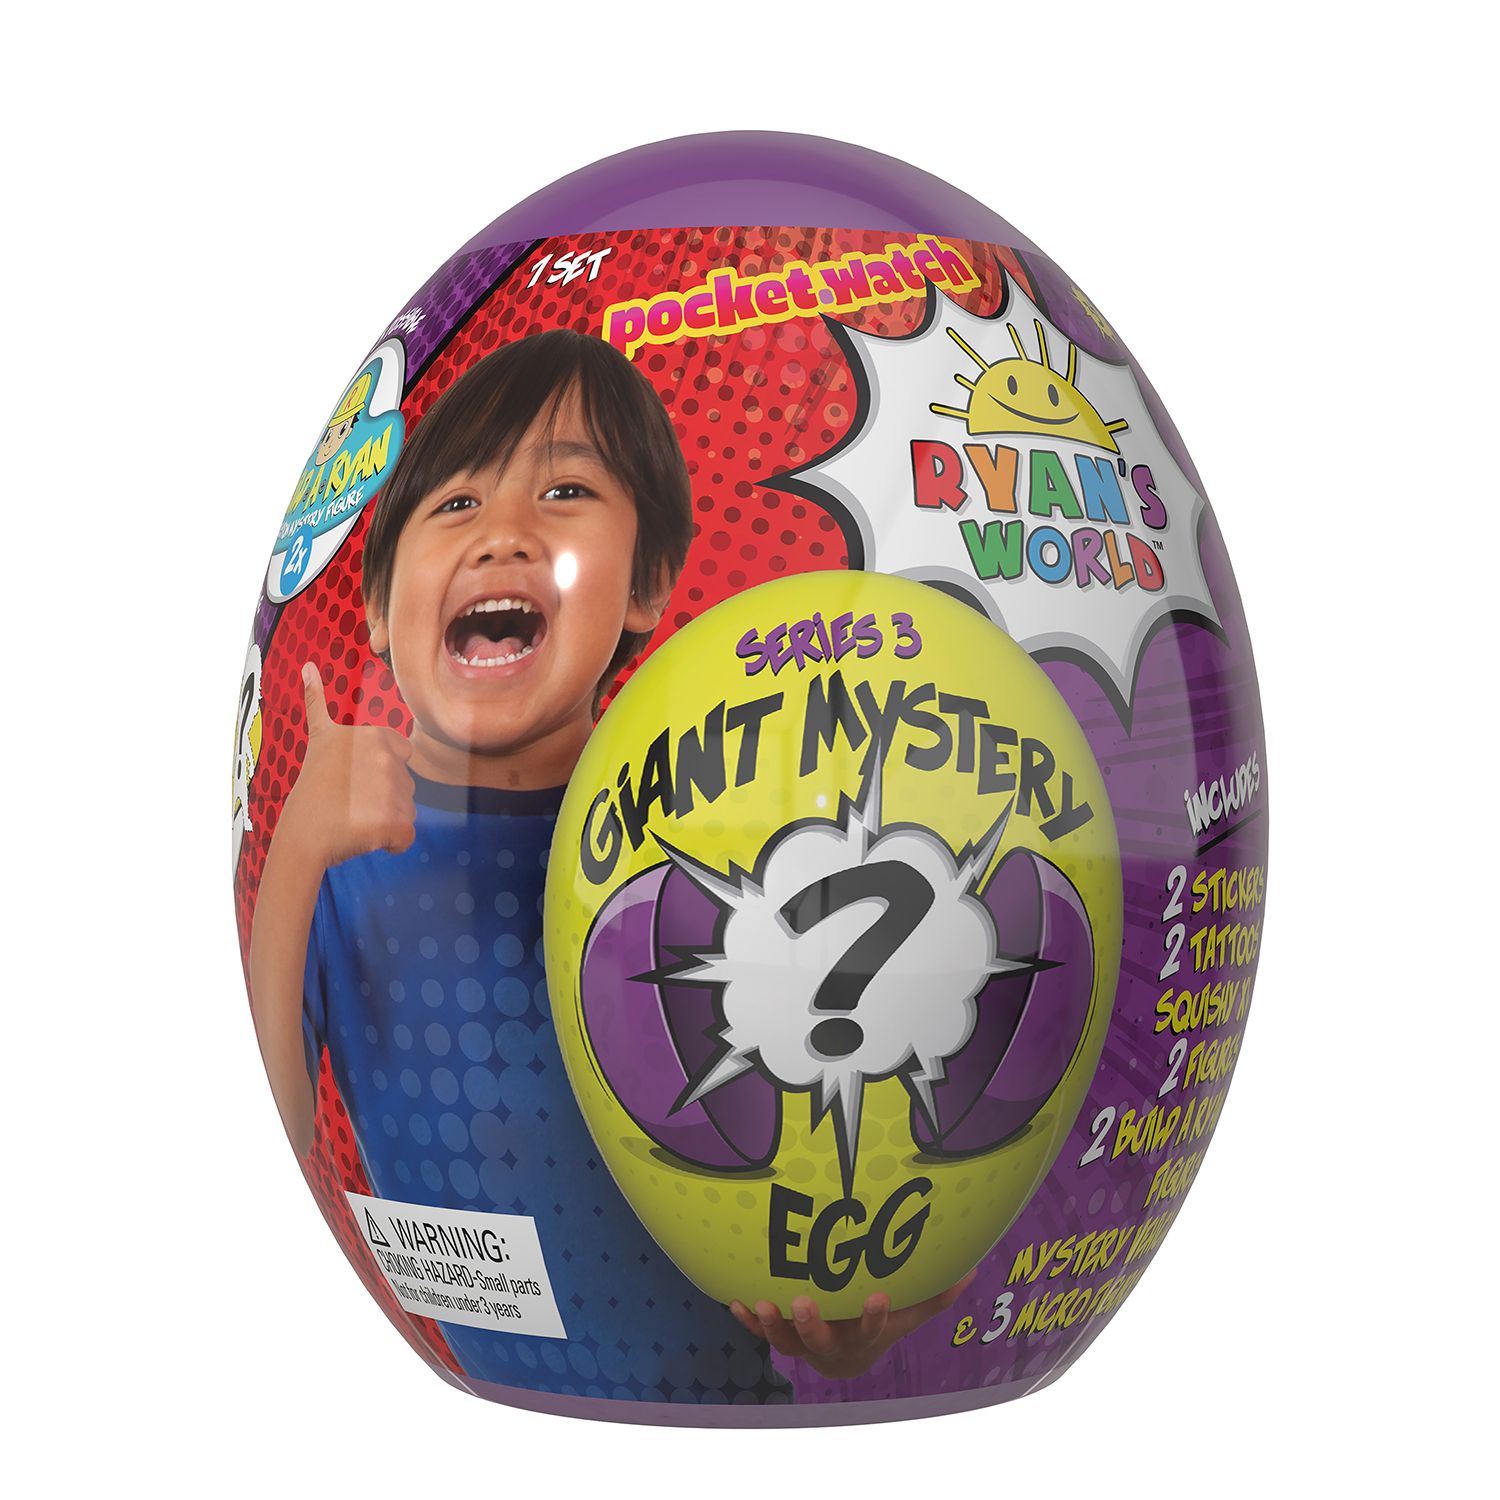 ryan's large mystery egg